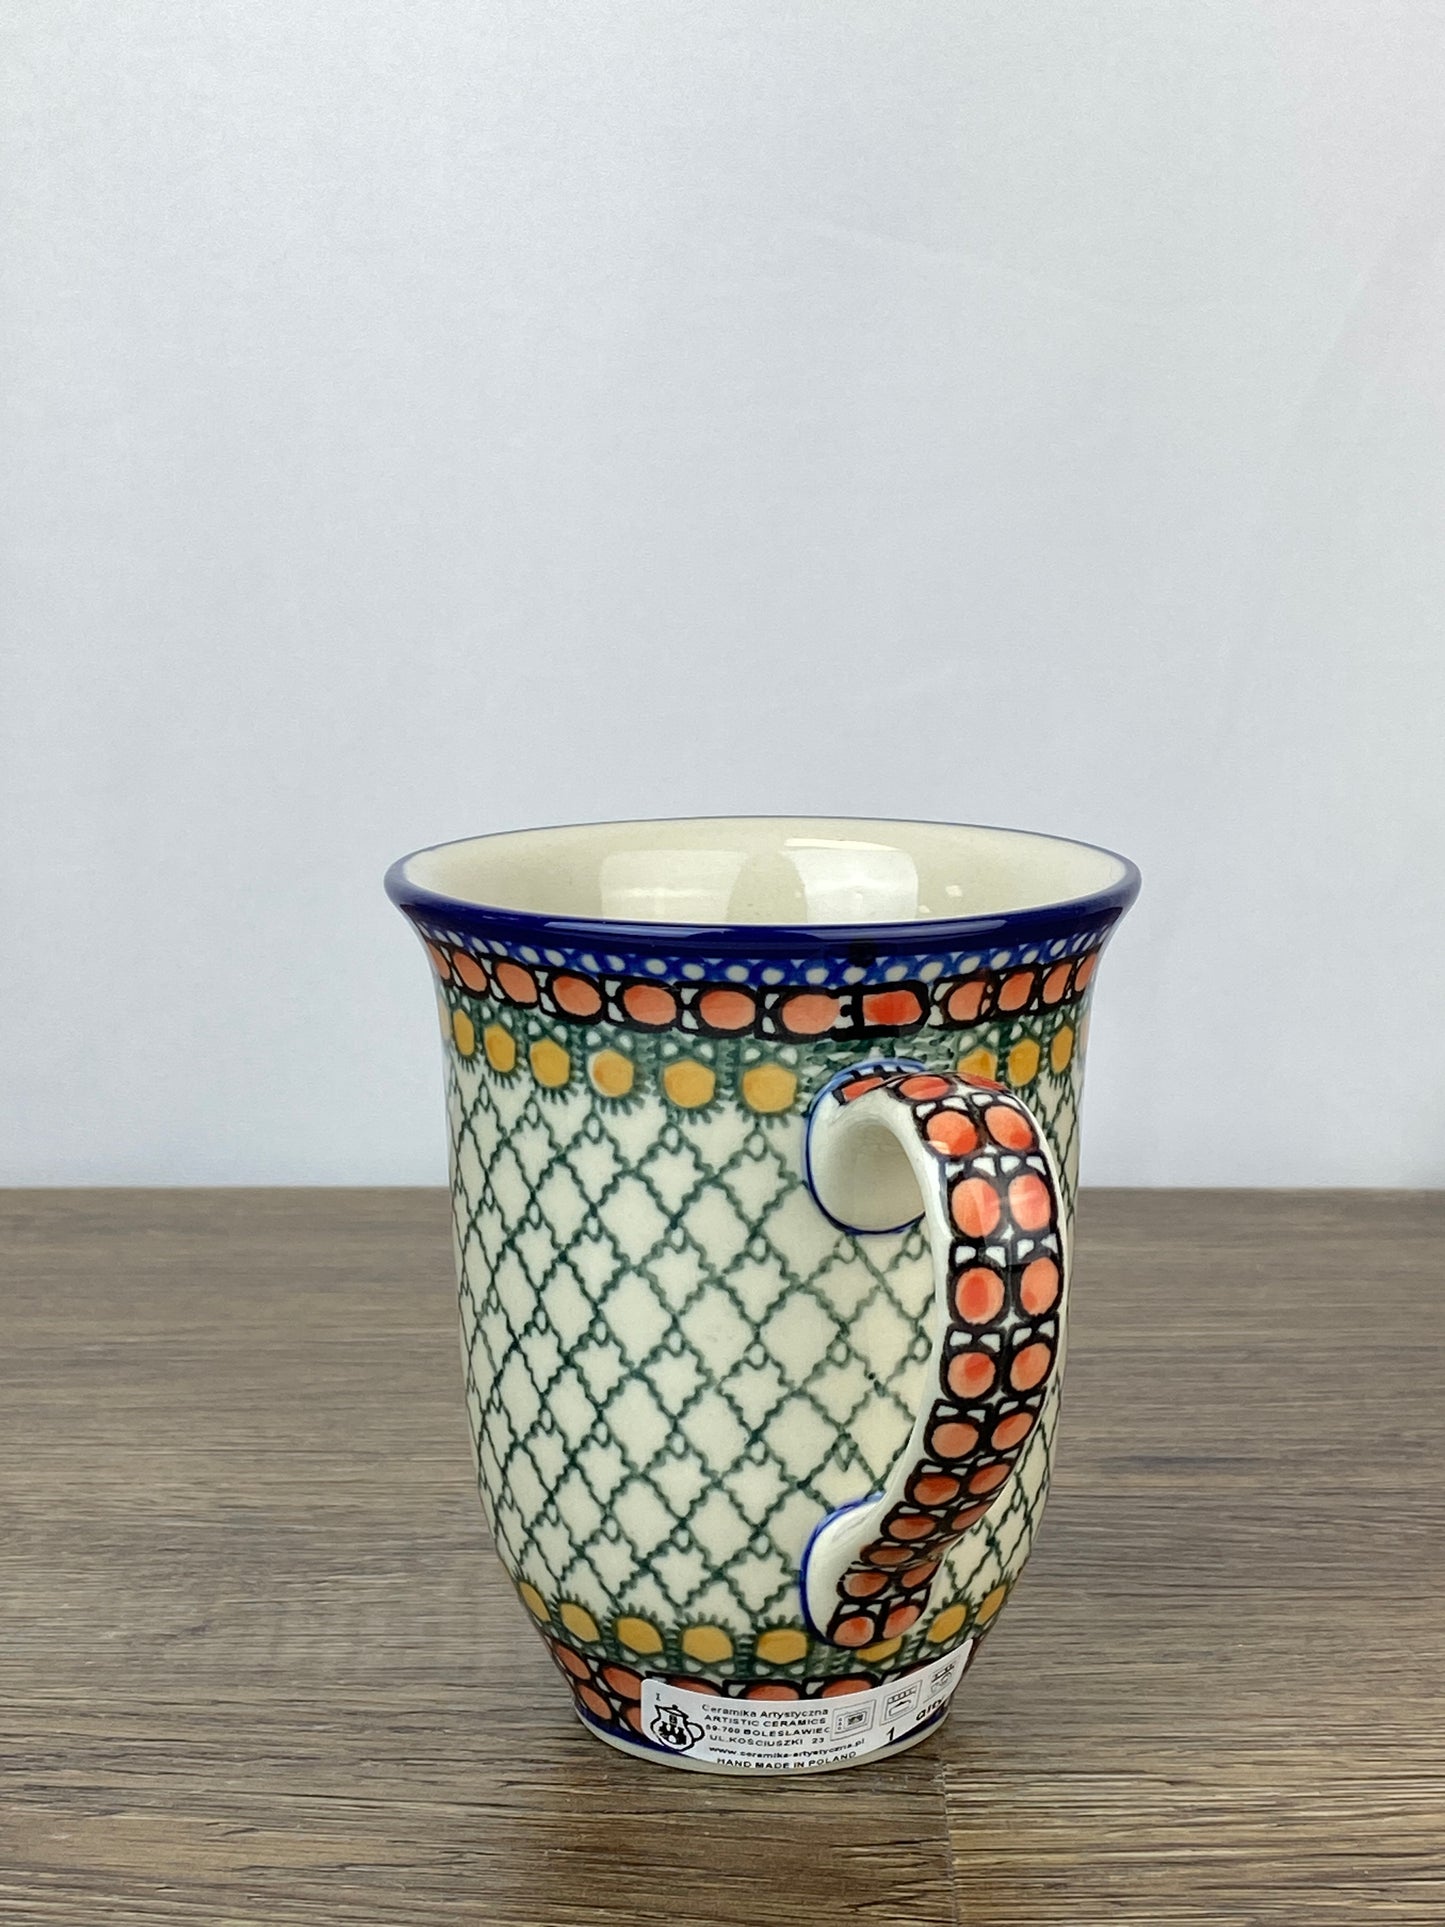 SALE Unikat Bistro Mug - Shape 826 - Pattern U81